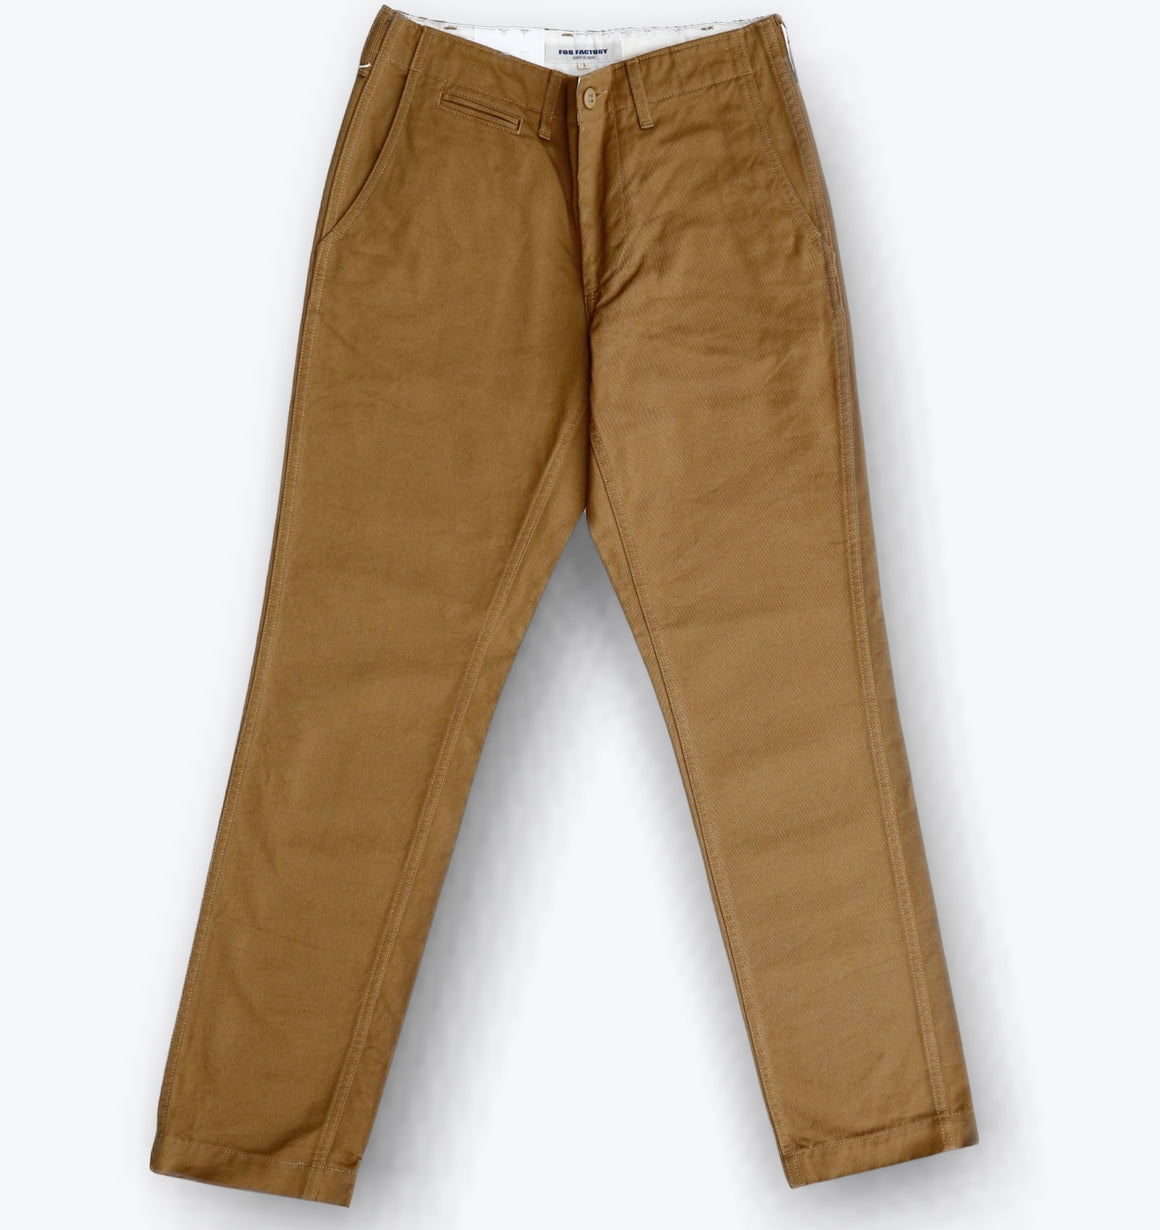 FOB Factory "Narrow U. S. Trousers"